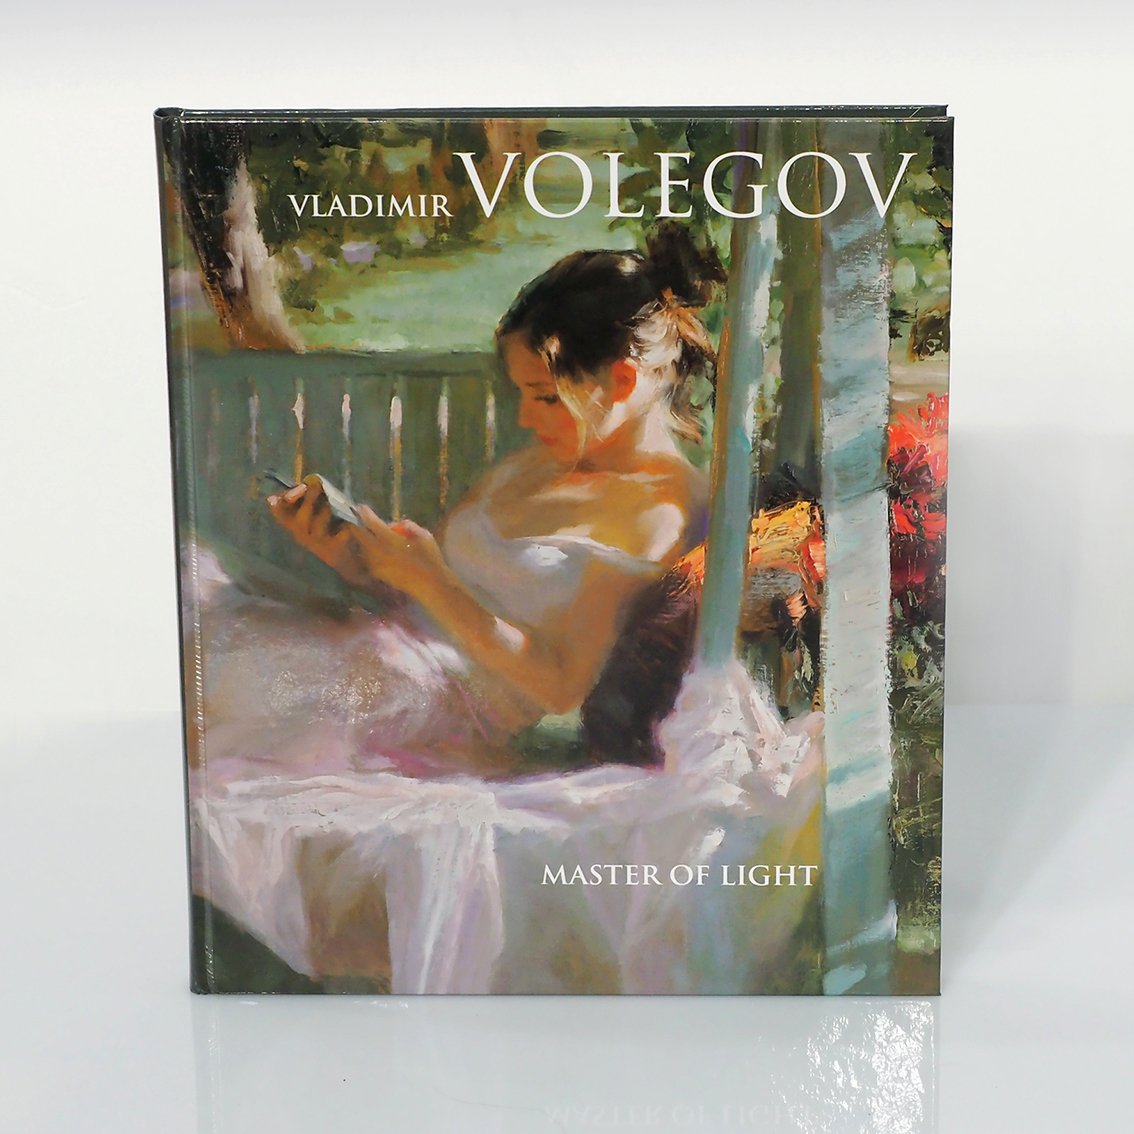 Image of A Signed Album/Book Vladimir Volegov "Master of Light"